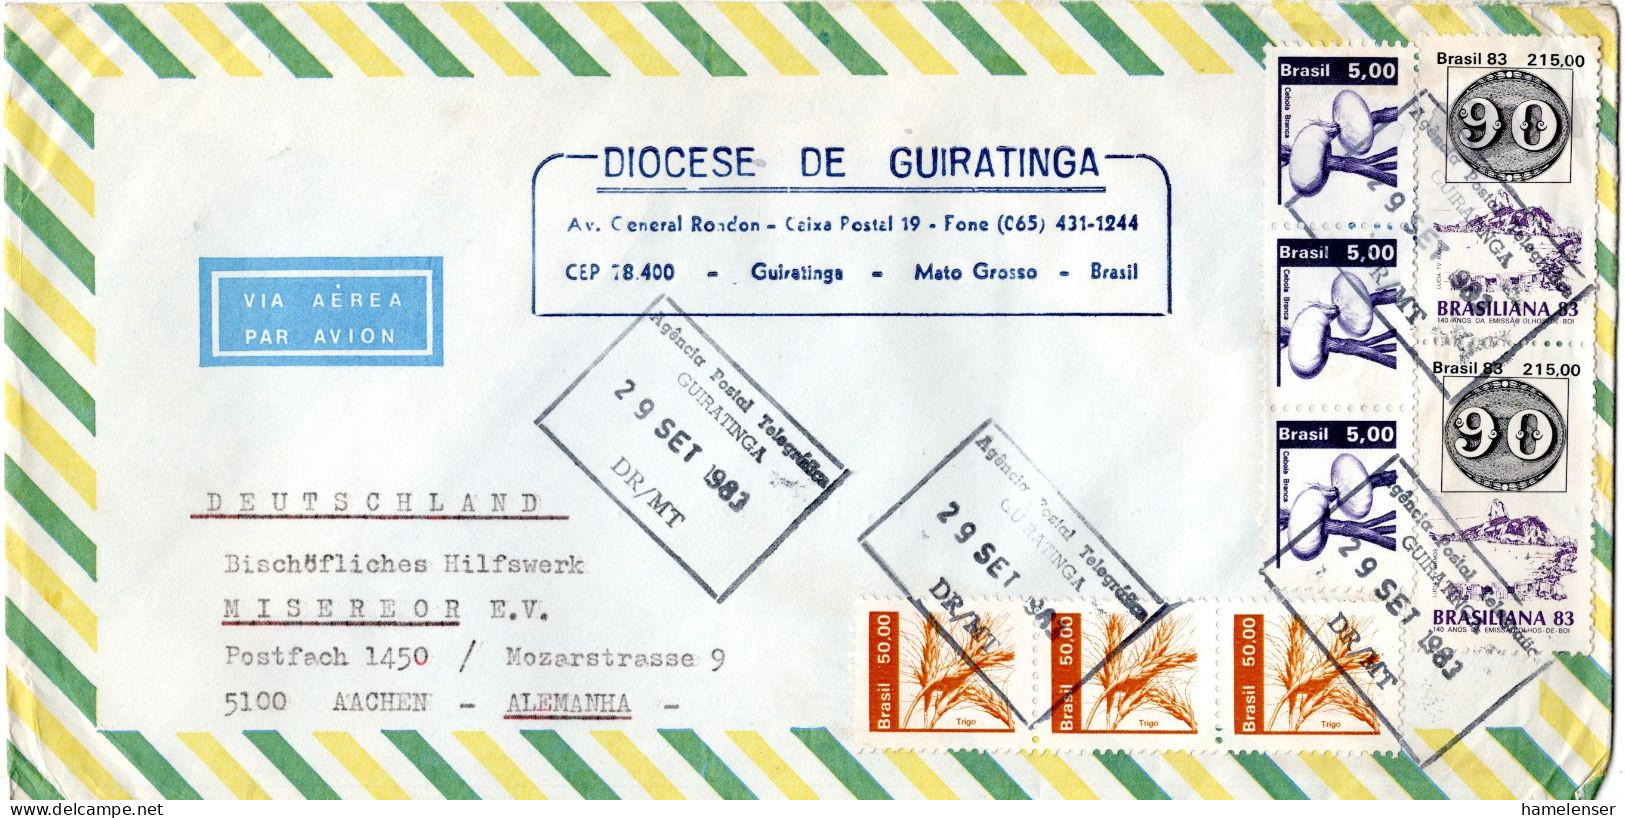 L75020 - Brasilien - 1983 - 2@Cr215,00 Brasiliana '83 MiF A LpBf GUIRATINGA -> Westdeutschland - Cartas & Documentos